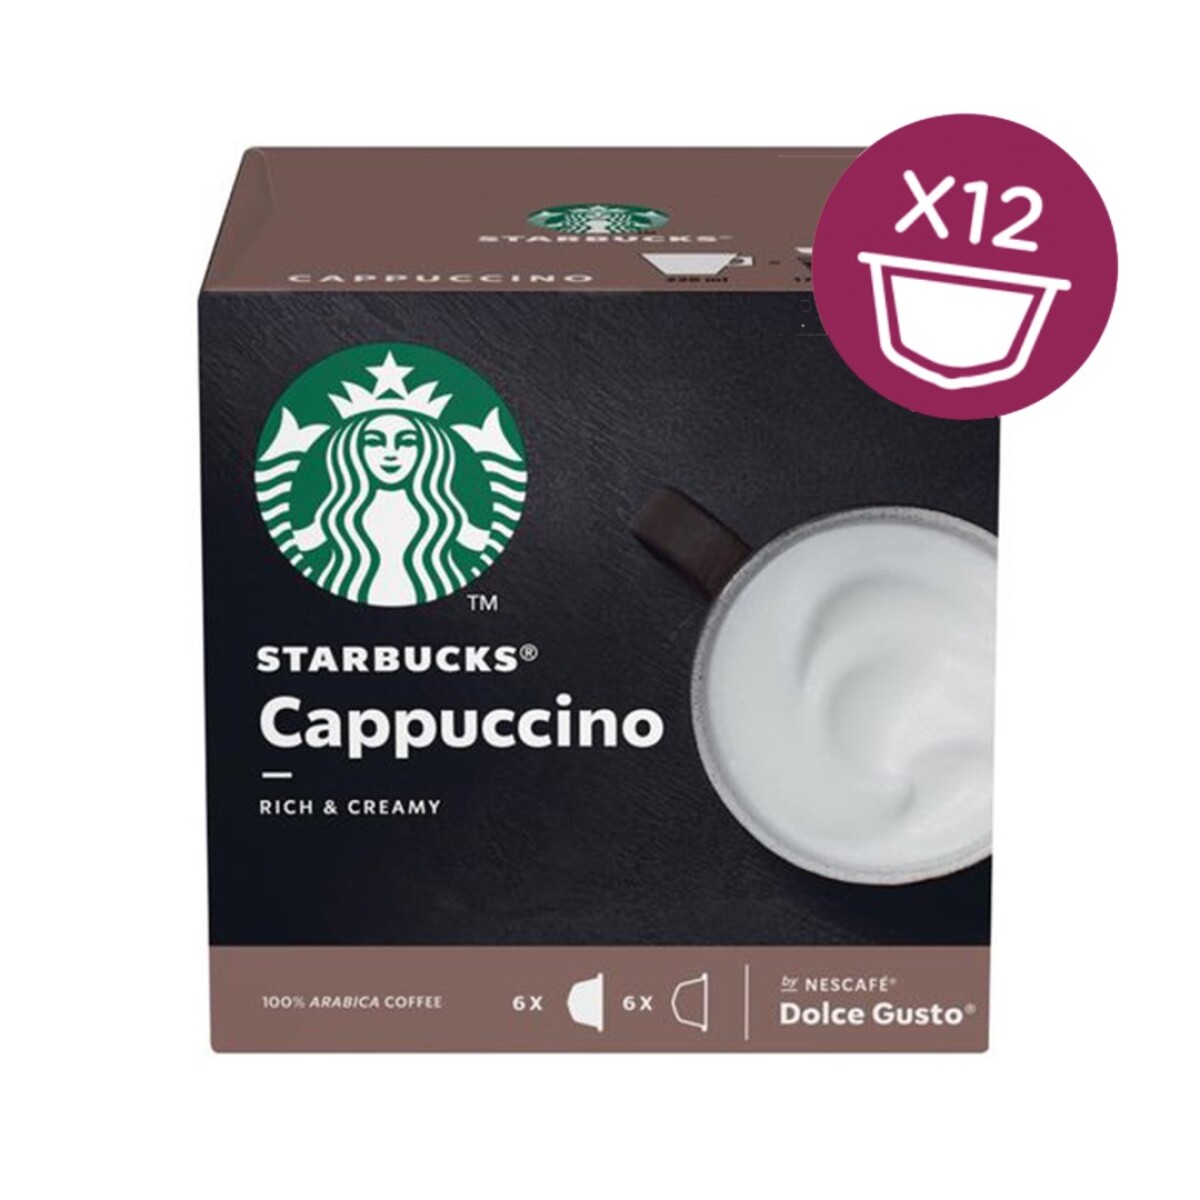 Capsulas Starbucks Cappuccino X12 Capsulas - 001 